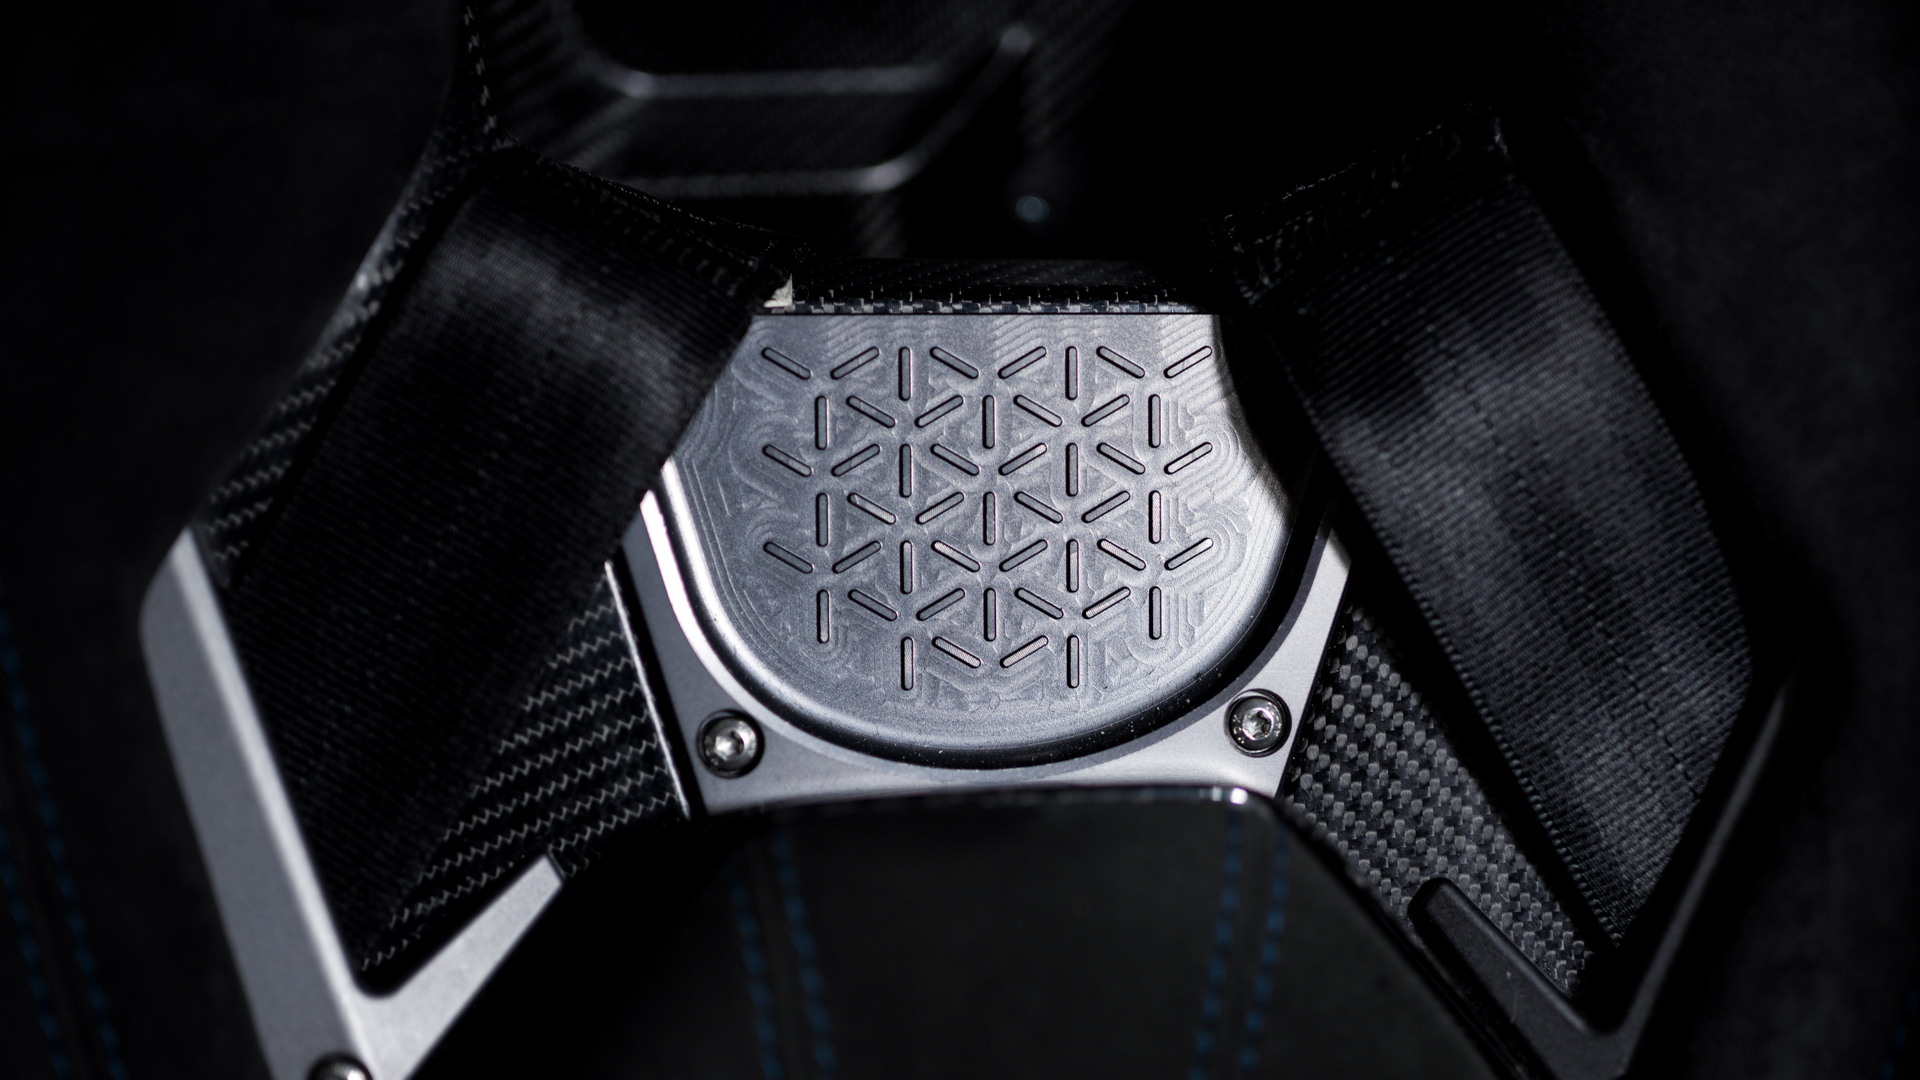 Bobema seatbelt detail